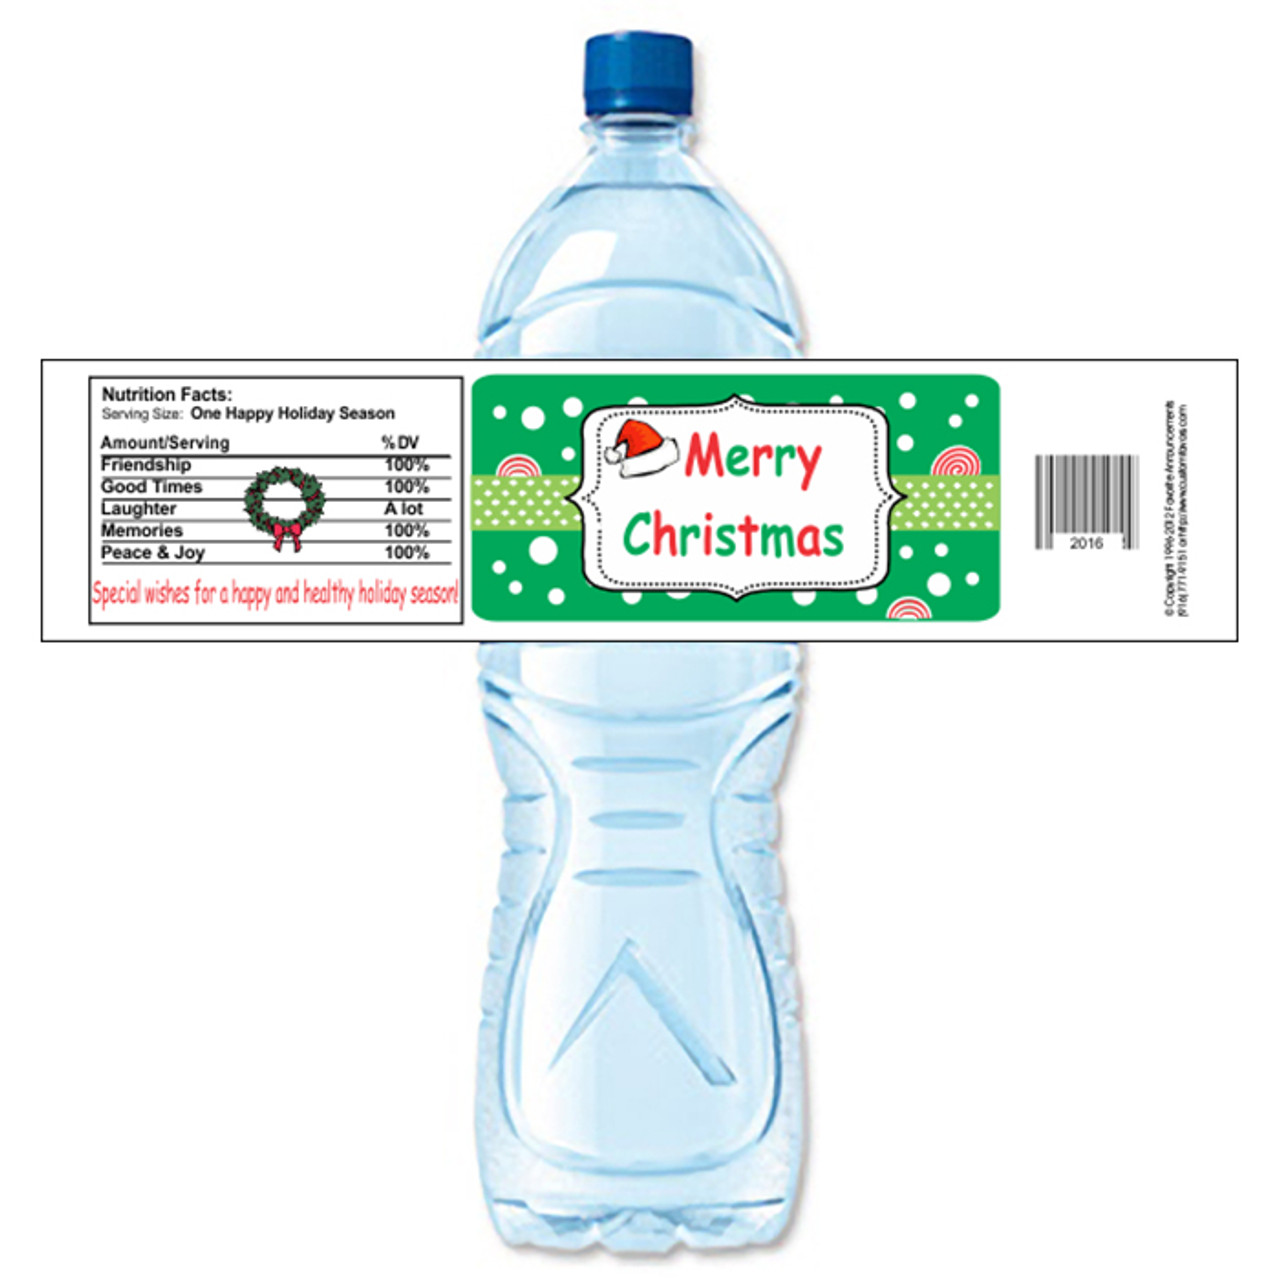 Polar Express EDITABLE Christmas Water Bottle Label · Major Gates